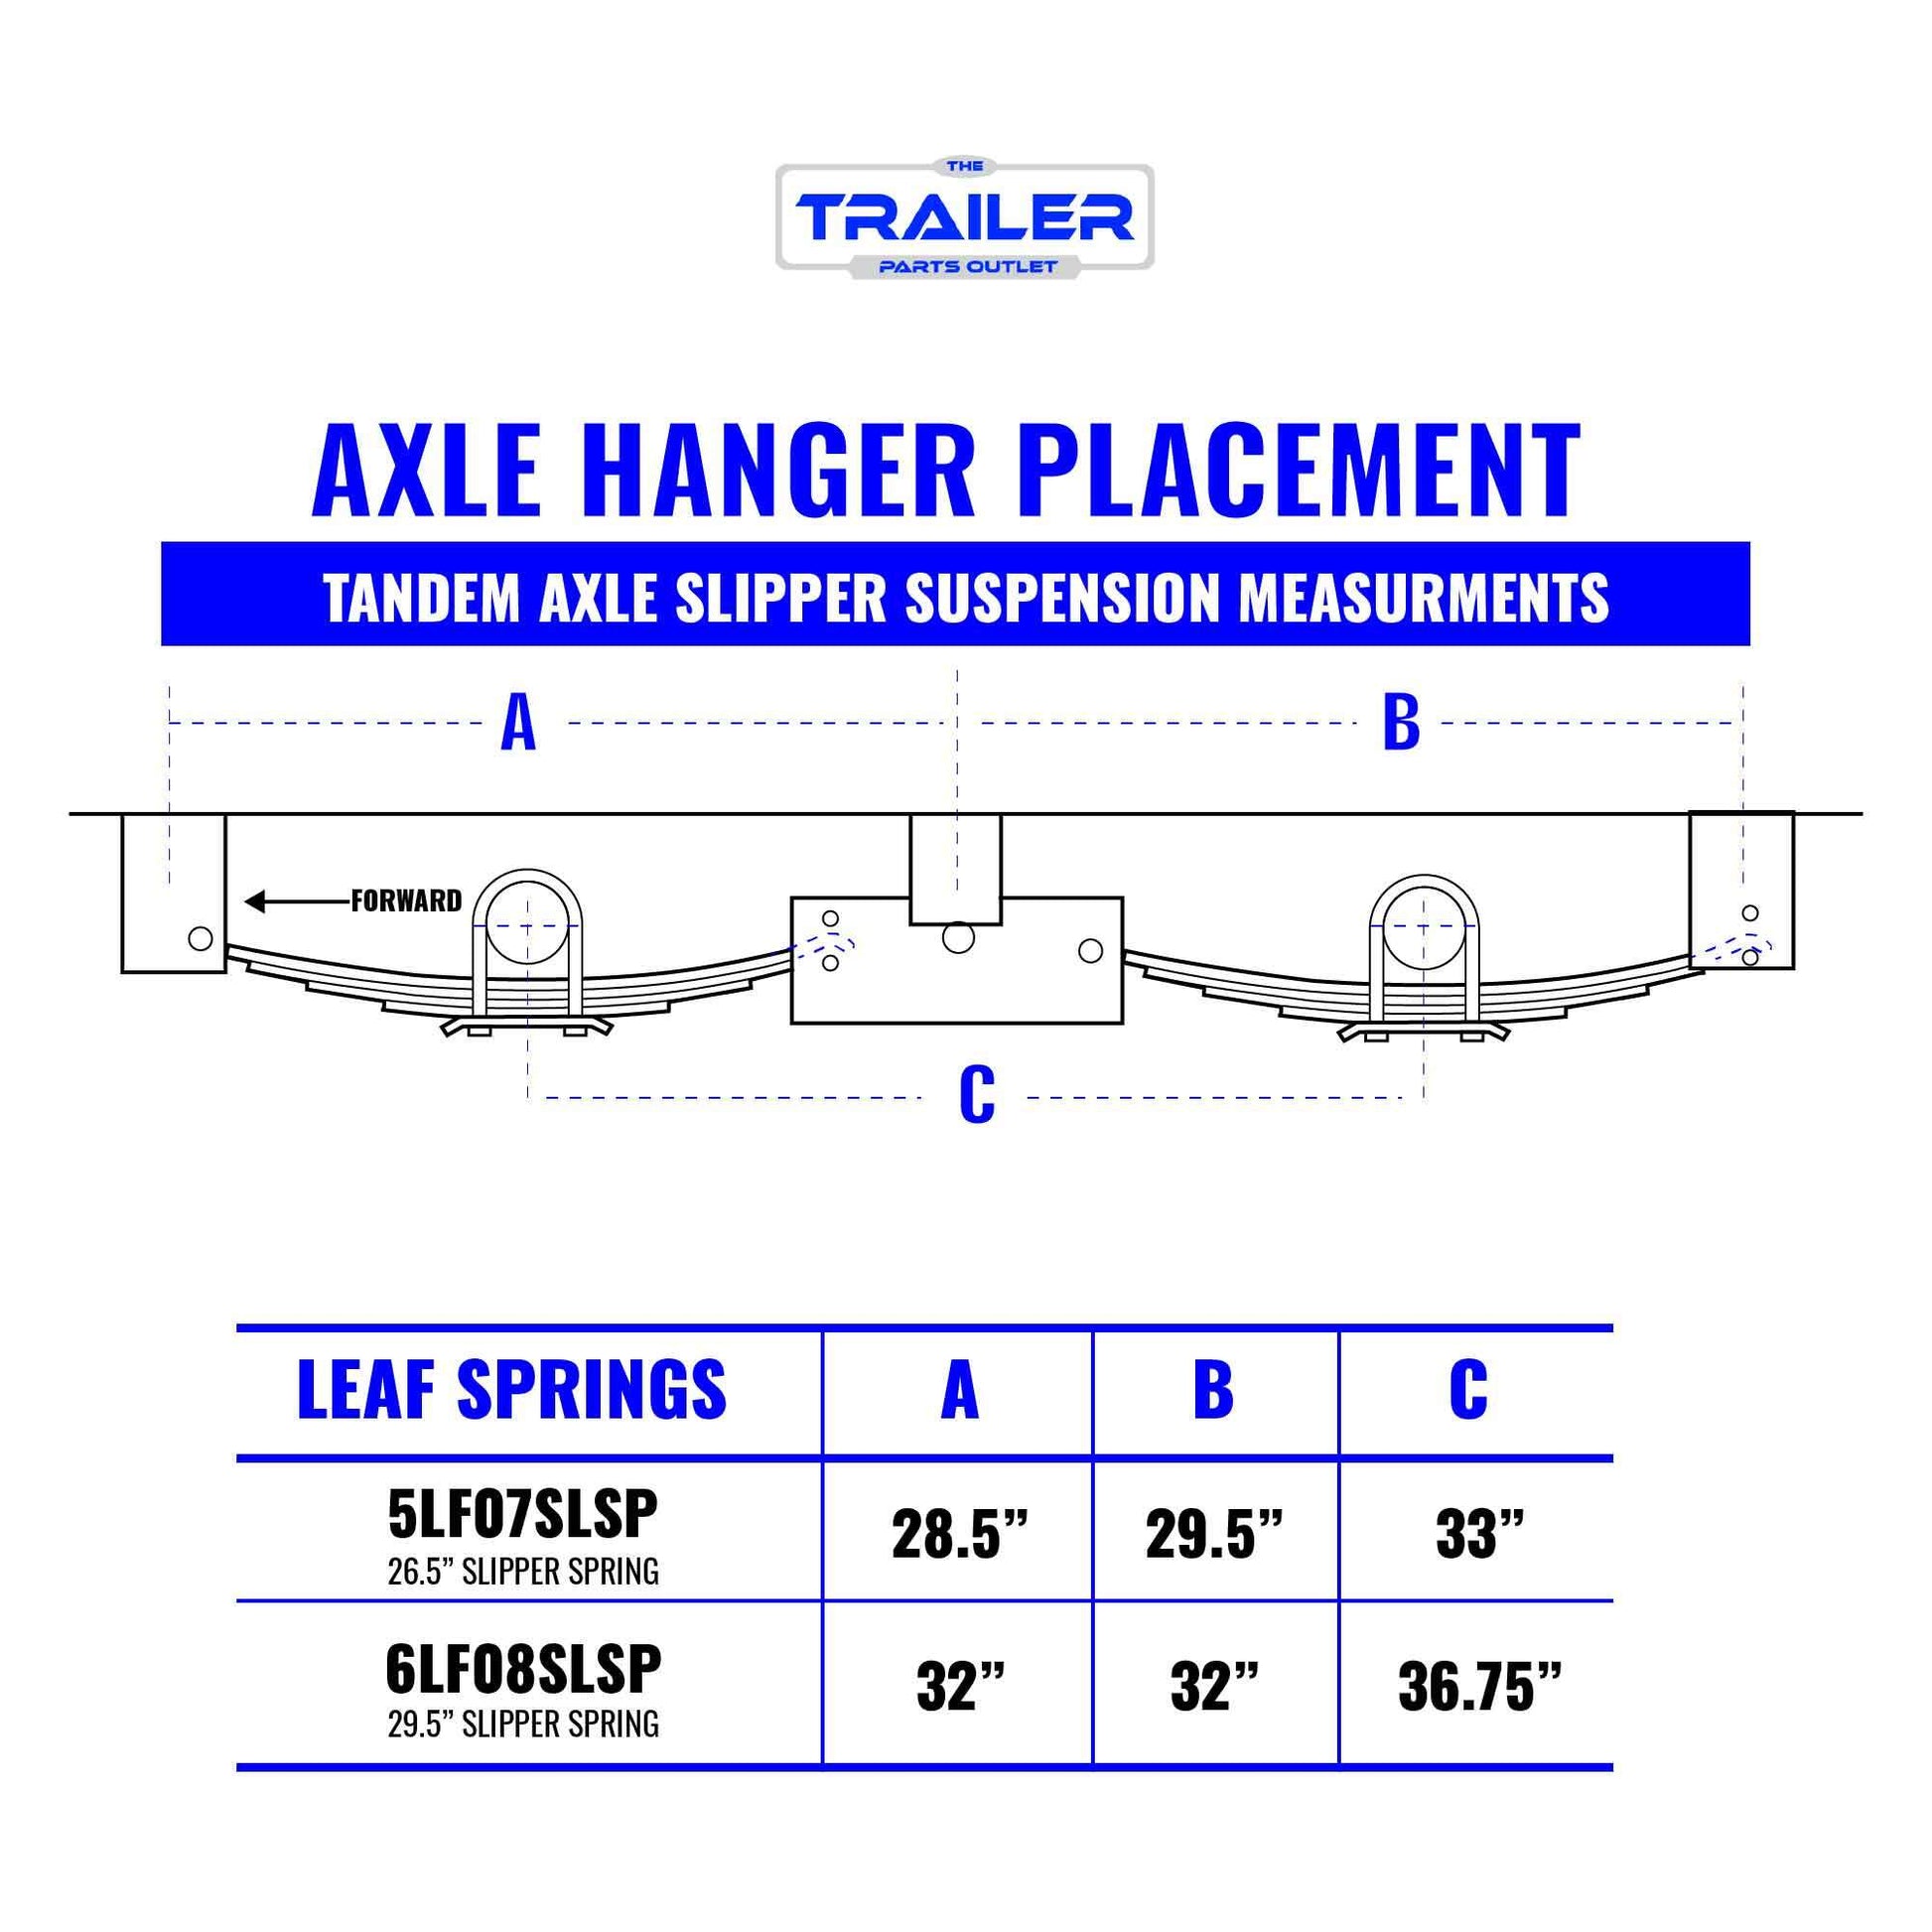 7000 lb Heavy Duty Tandem Axle TK Trailer Kit - 14K Capacity - (Original Series) - The Trailer Parts Outlet